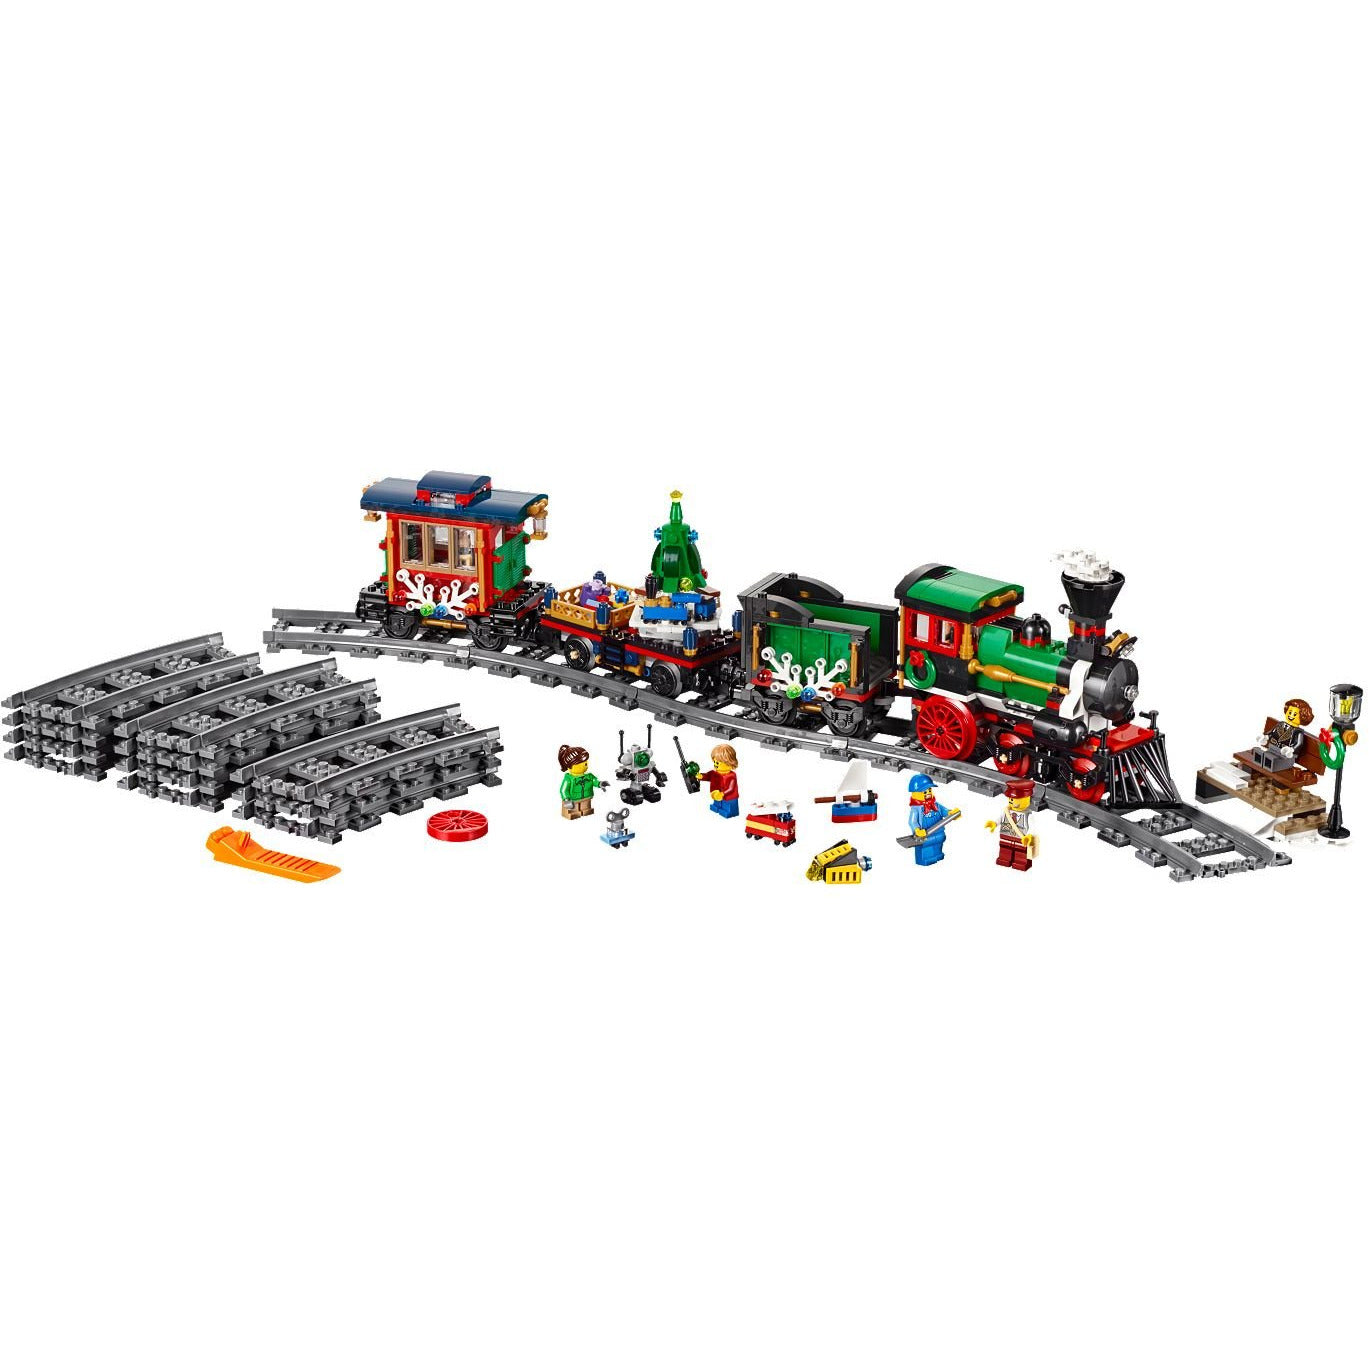 Lego Winter Village: Winter Holiday Train 10254